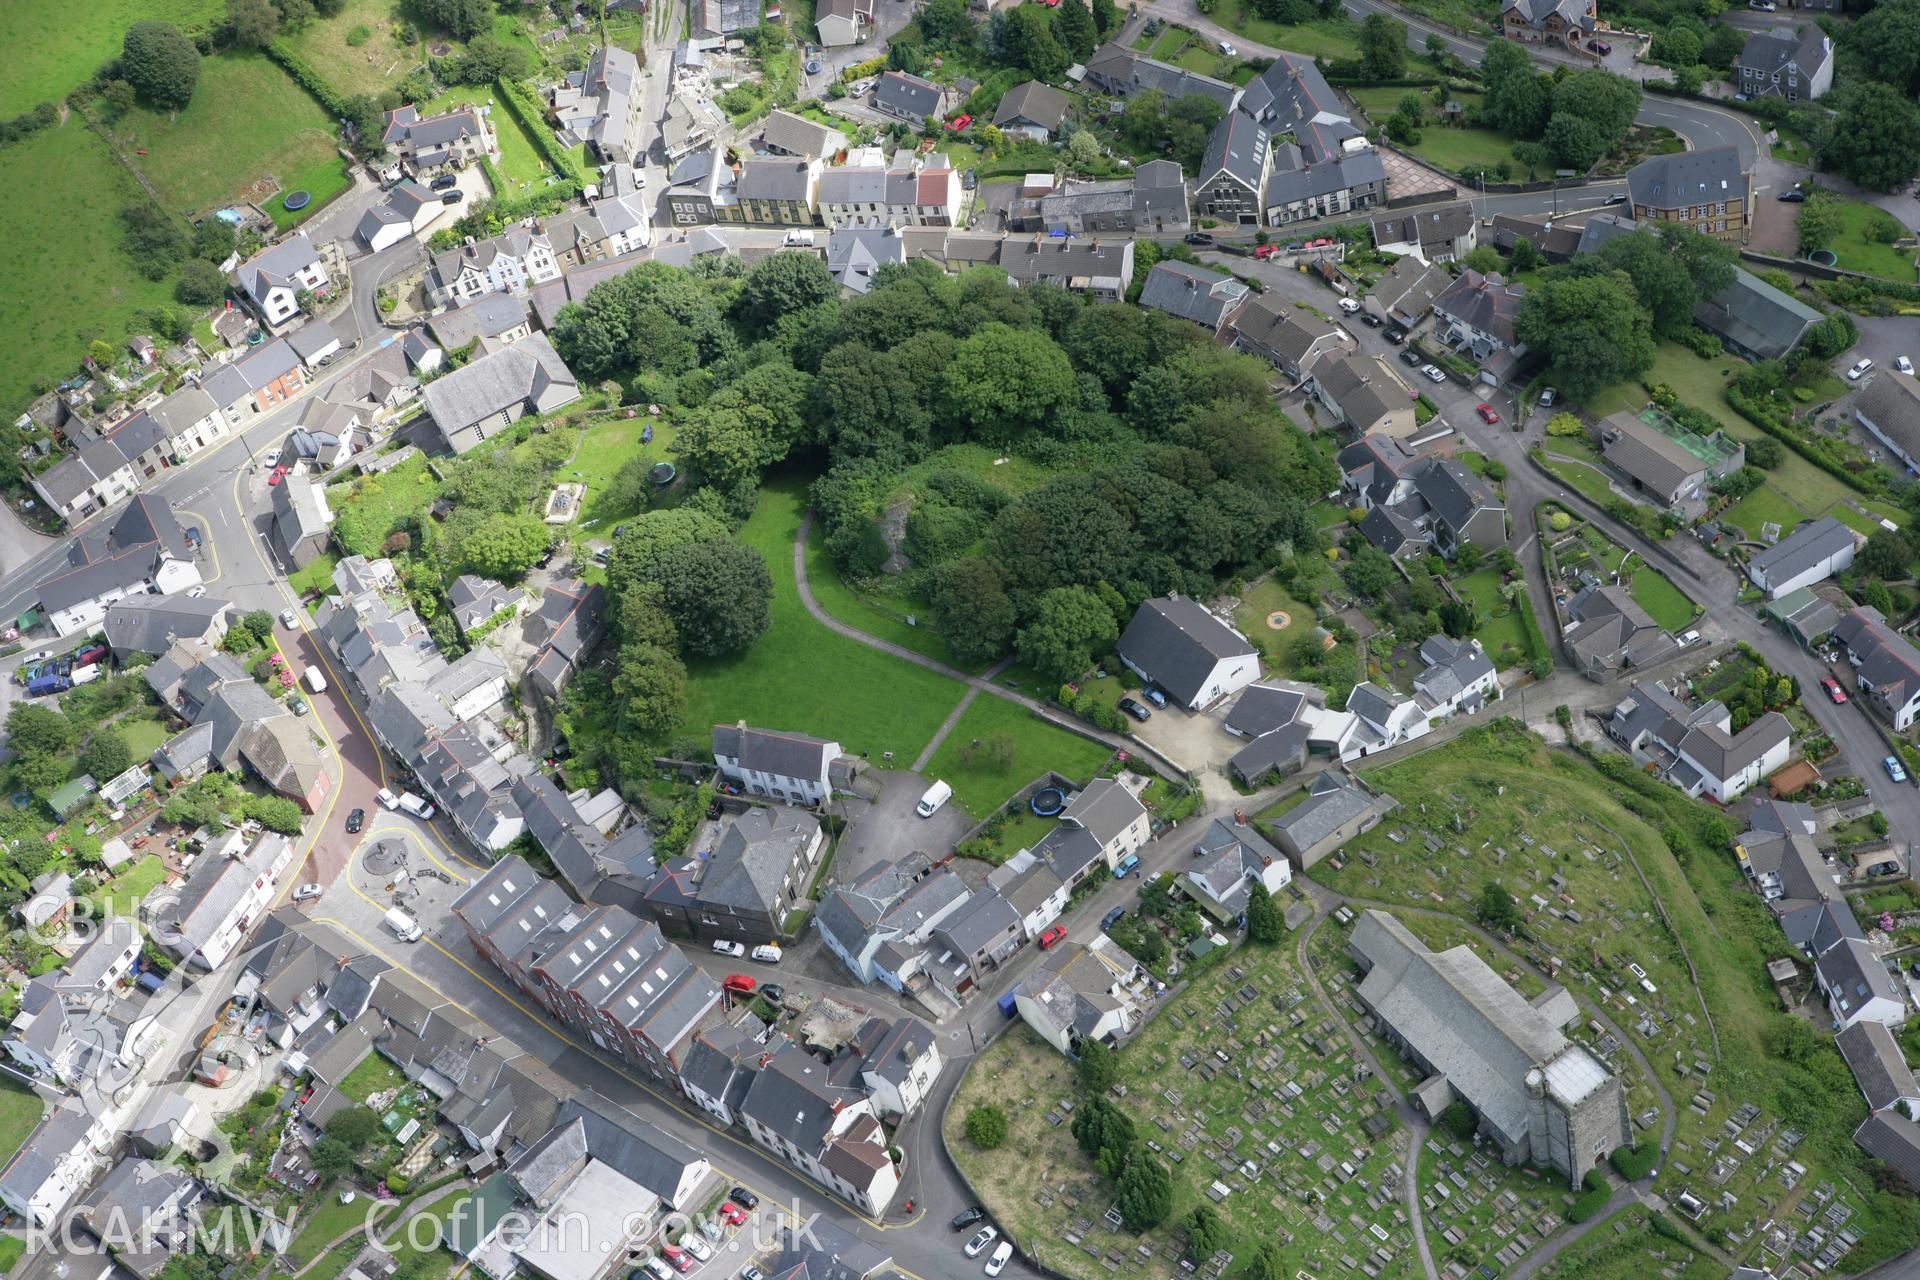 RCAHMW colour oblique aerial photograph of Llantrisant Castle. Taken on 30 July 2007 by Toby Driver